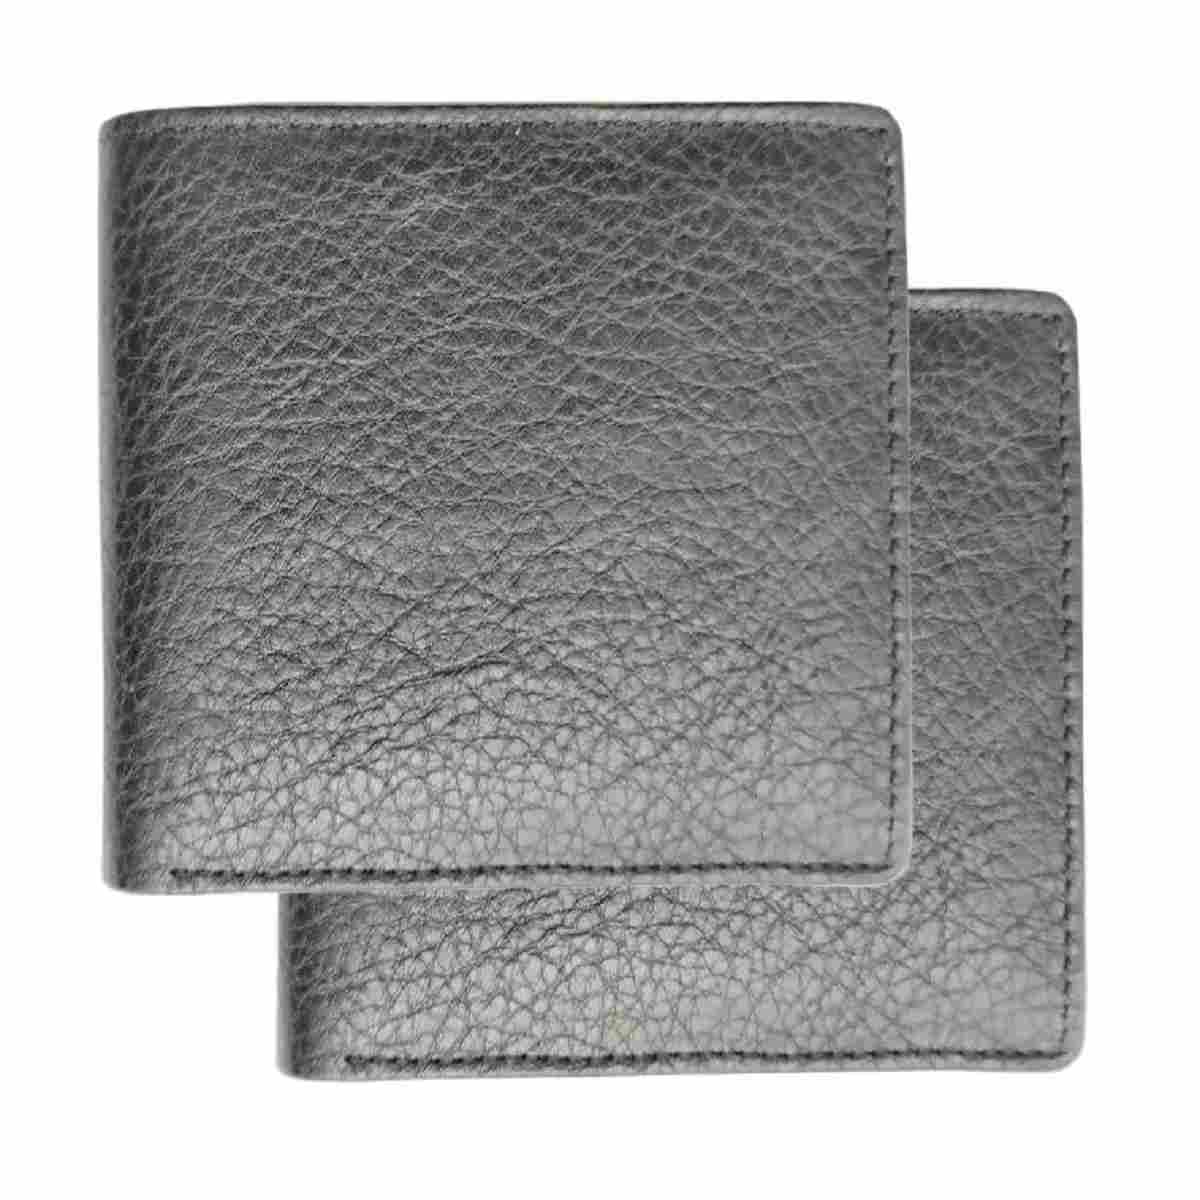 E2021 black wallets for men pack of 2-